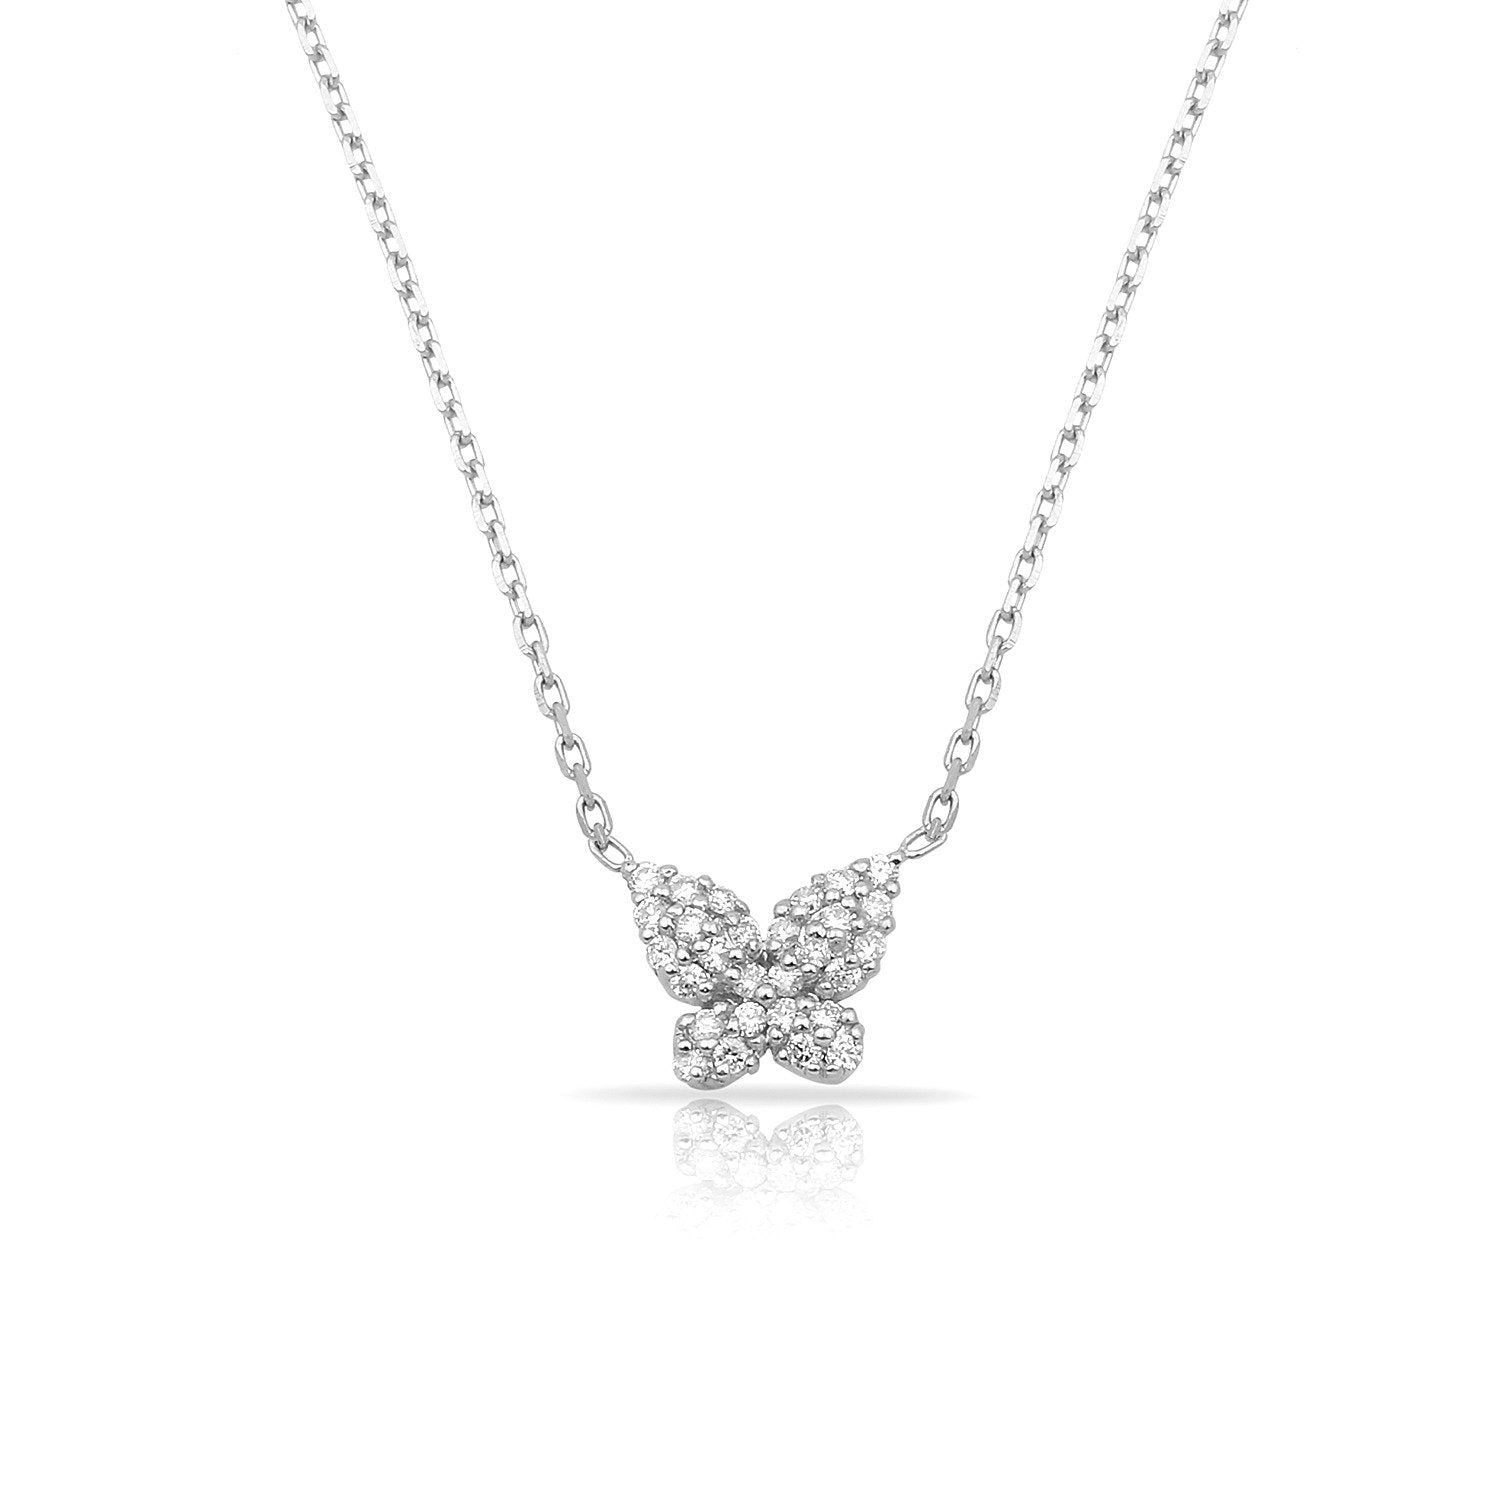 TSK Diamond Butterfly Necklace JEWELRY The Sis Kiss 14k White Gold